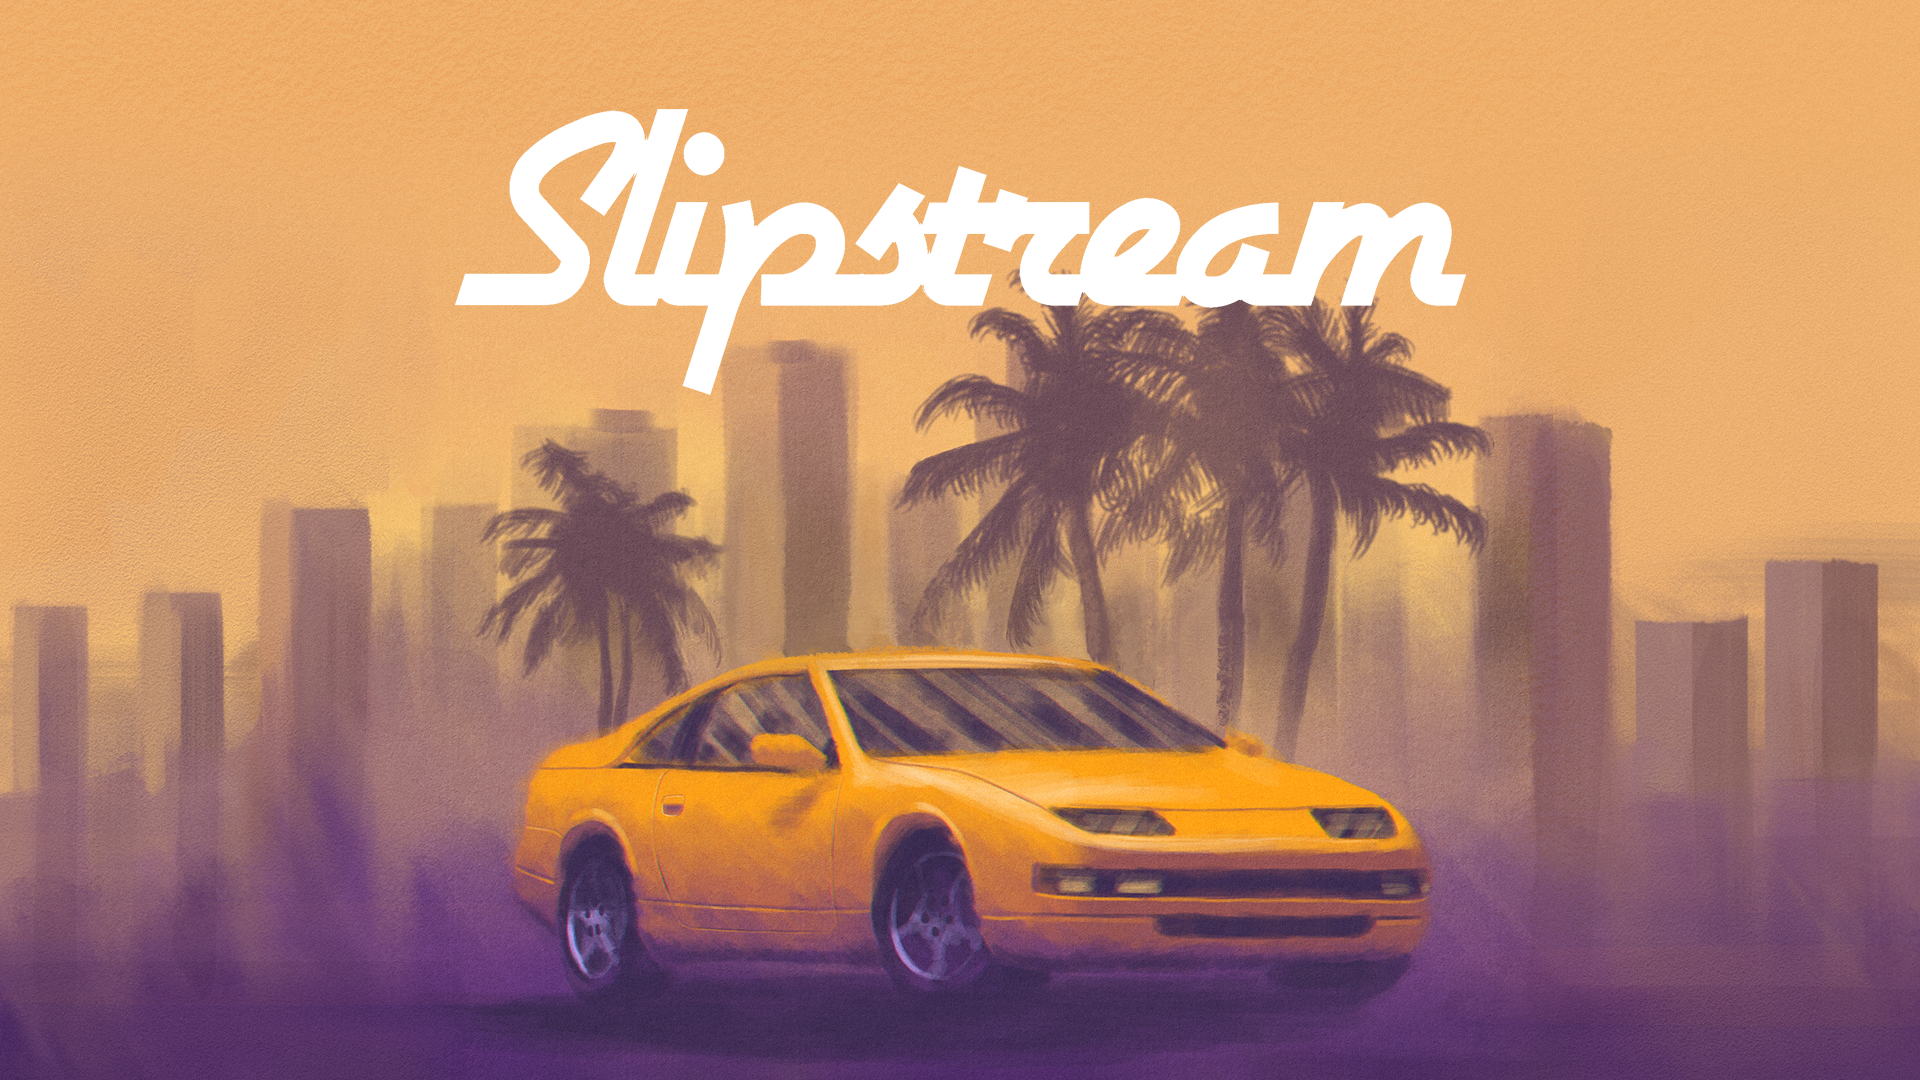 Slipstream Logo